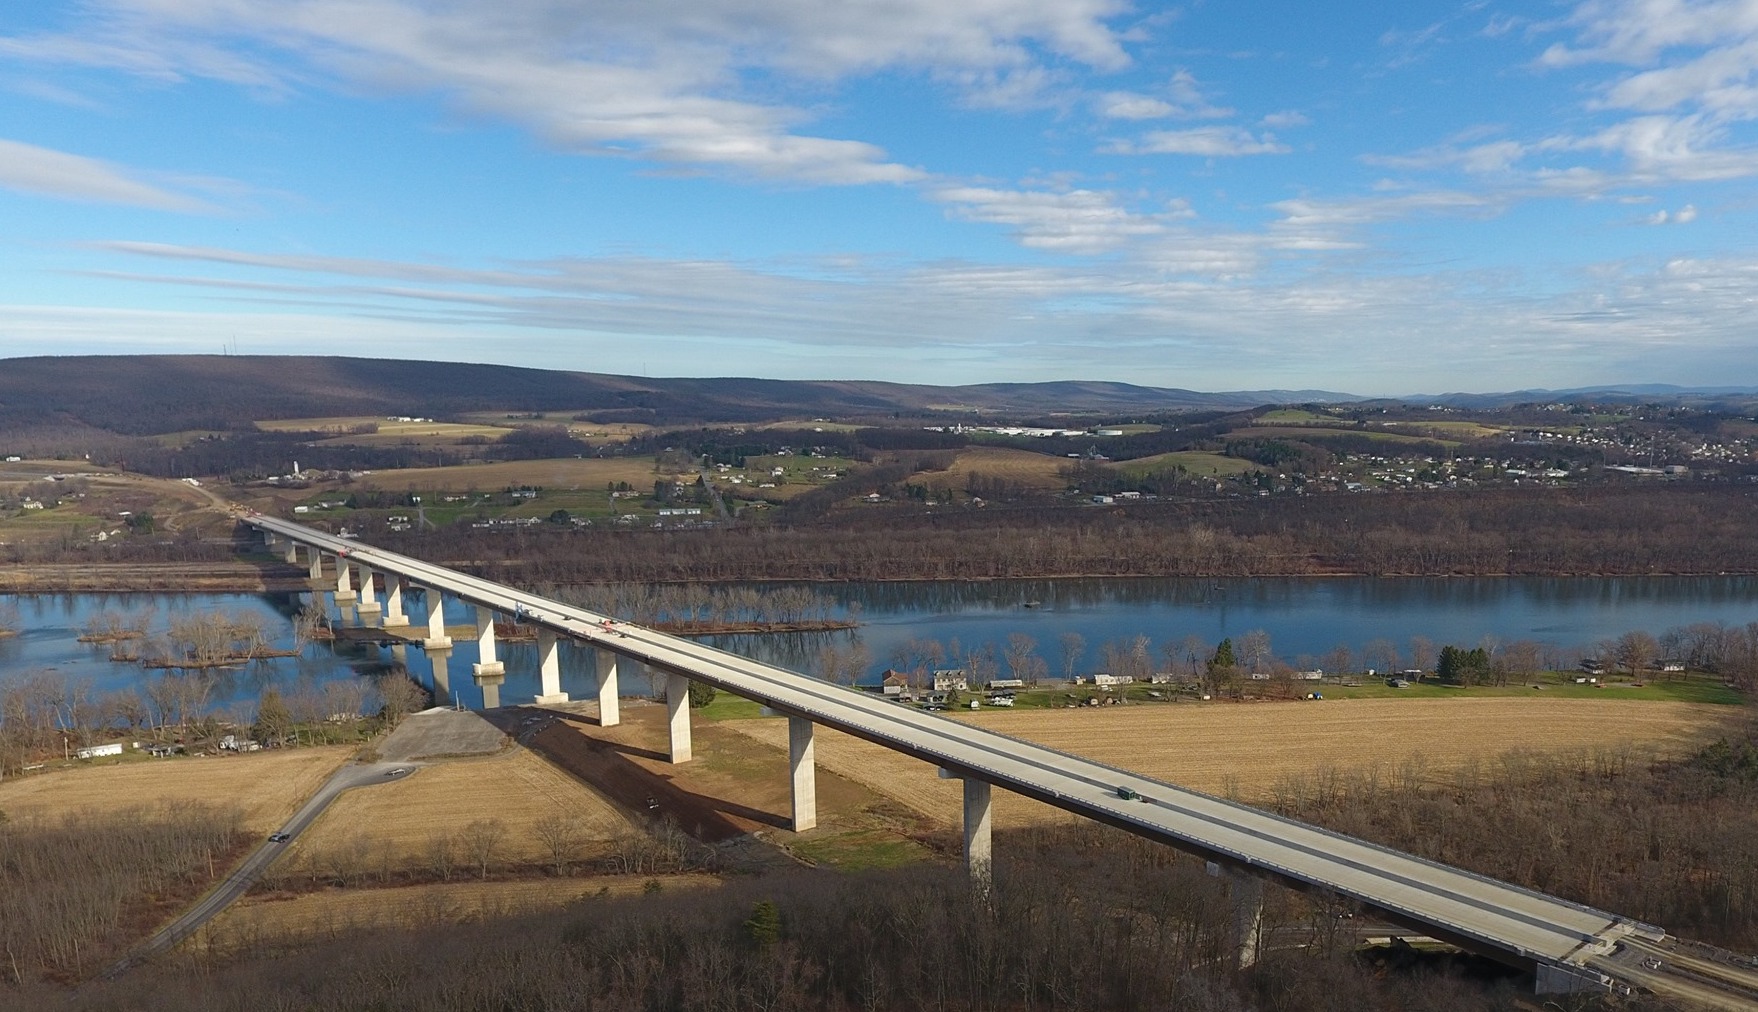 After 5 years, the Central Susquehanna Valley Thruway bridge is